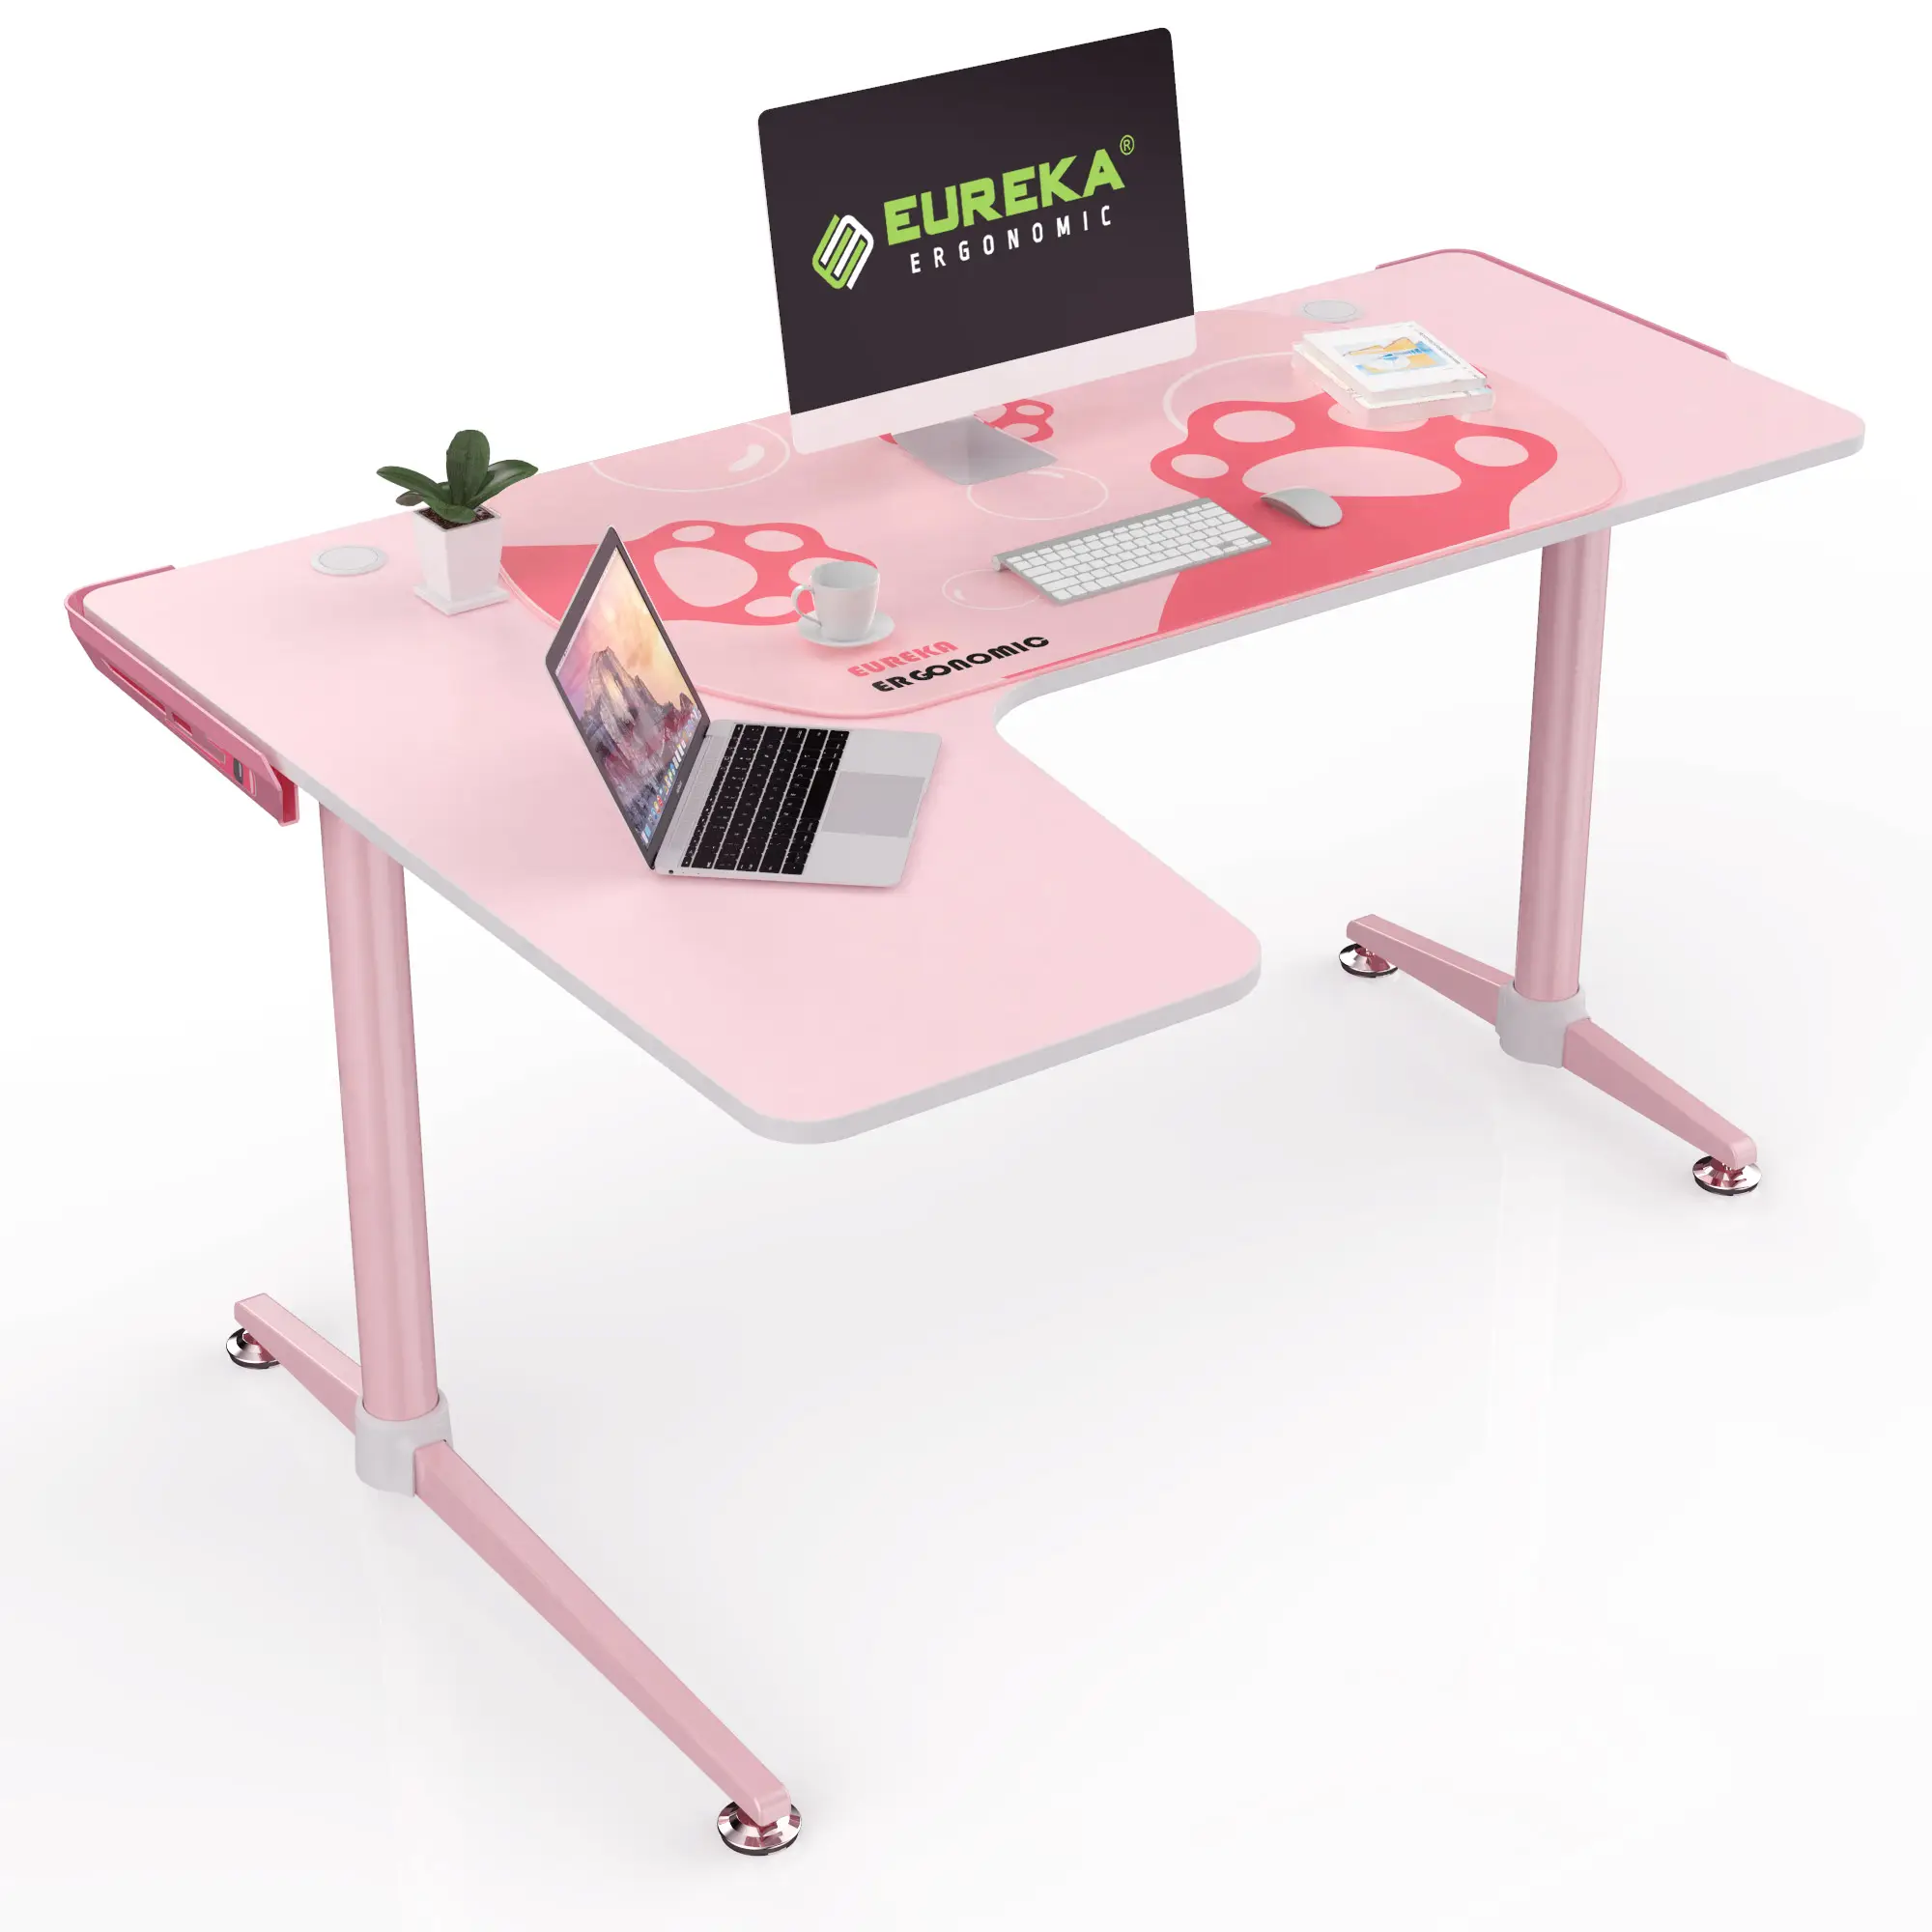 Esport-Silla de juegos para ordenador, escritorio moderno para PC, deportes electrónicos, carreras, color rosa, luces LED para mesa de juegos